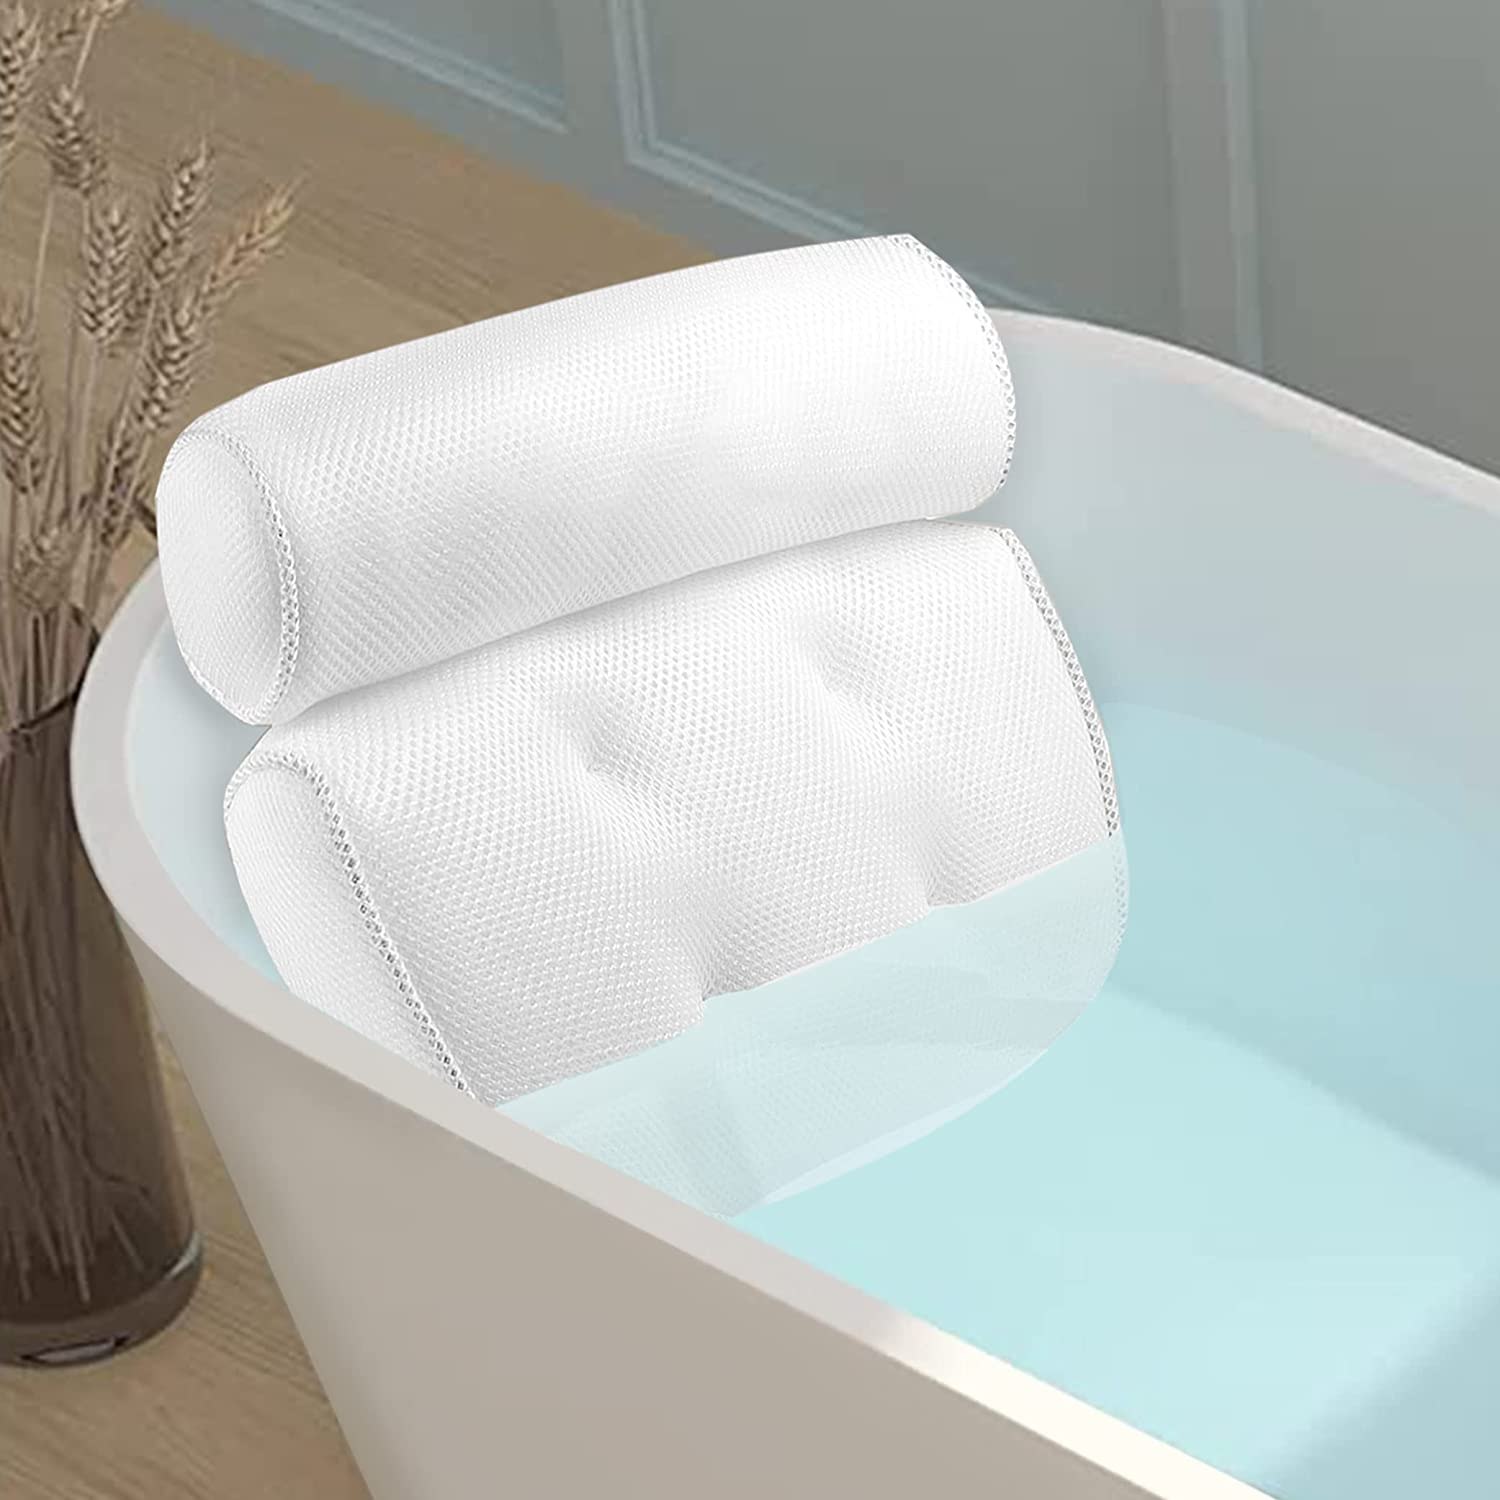  COMFYSURE Bath Cushion for Tub - Extra-Large Full